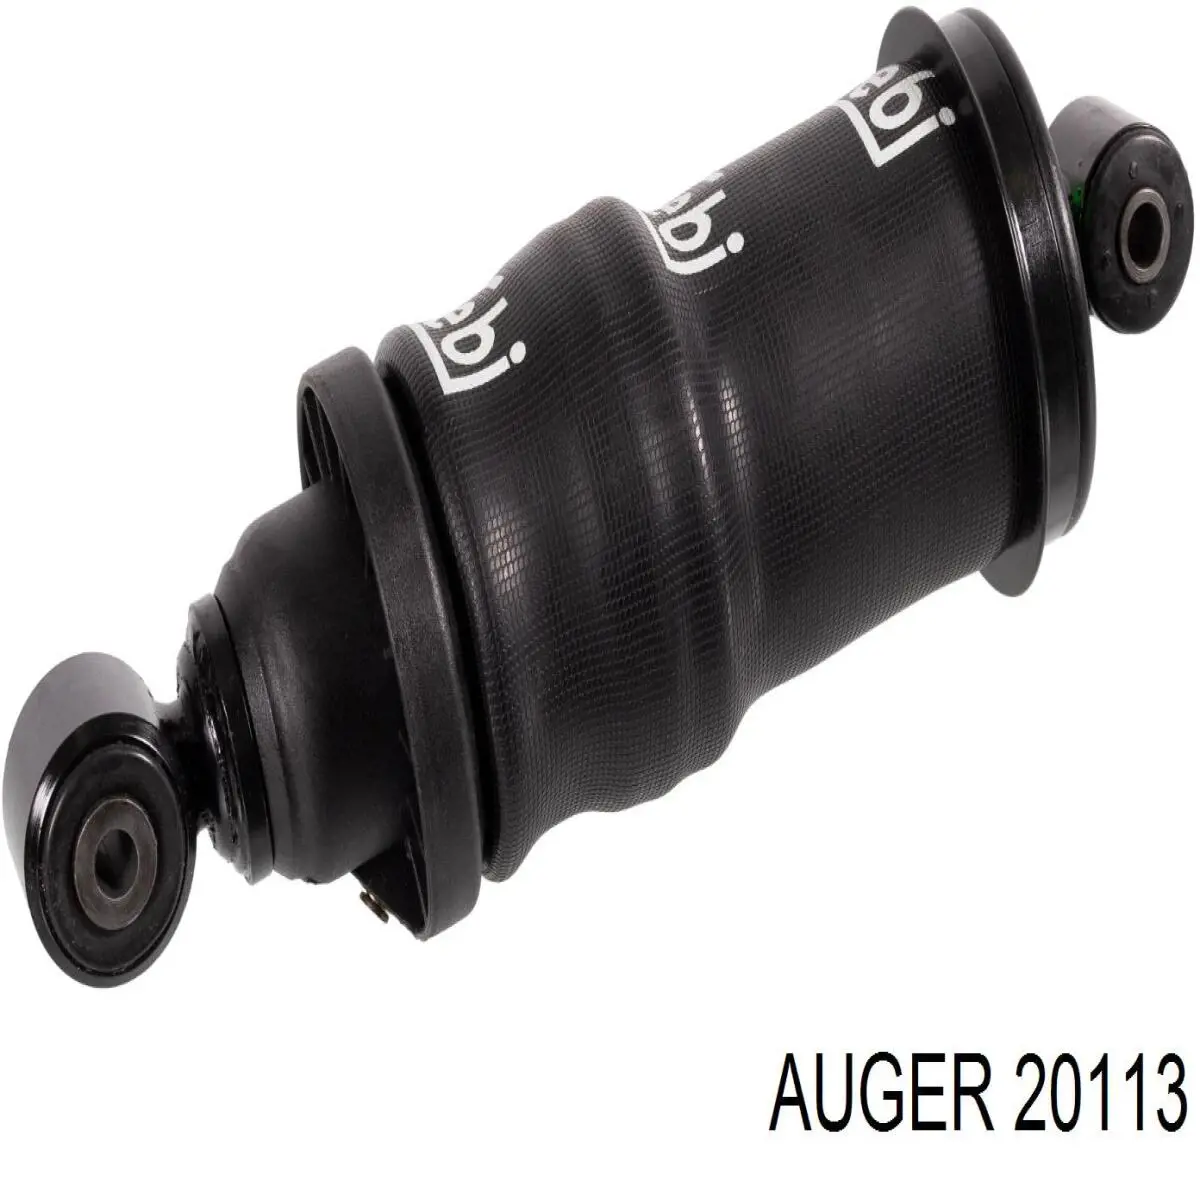 20113 Auger амортизатор кабины (truck)